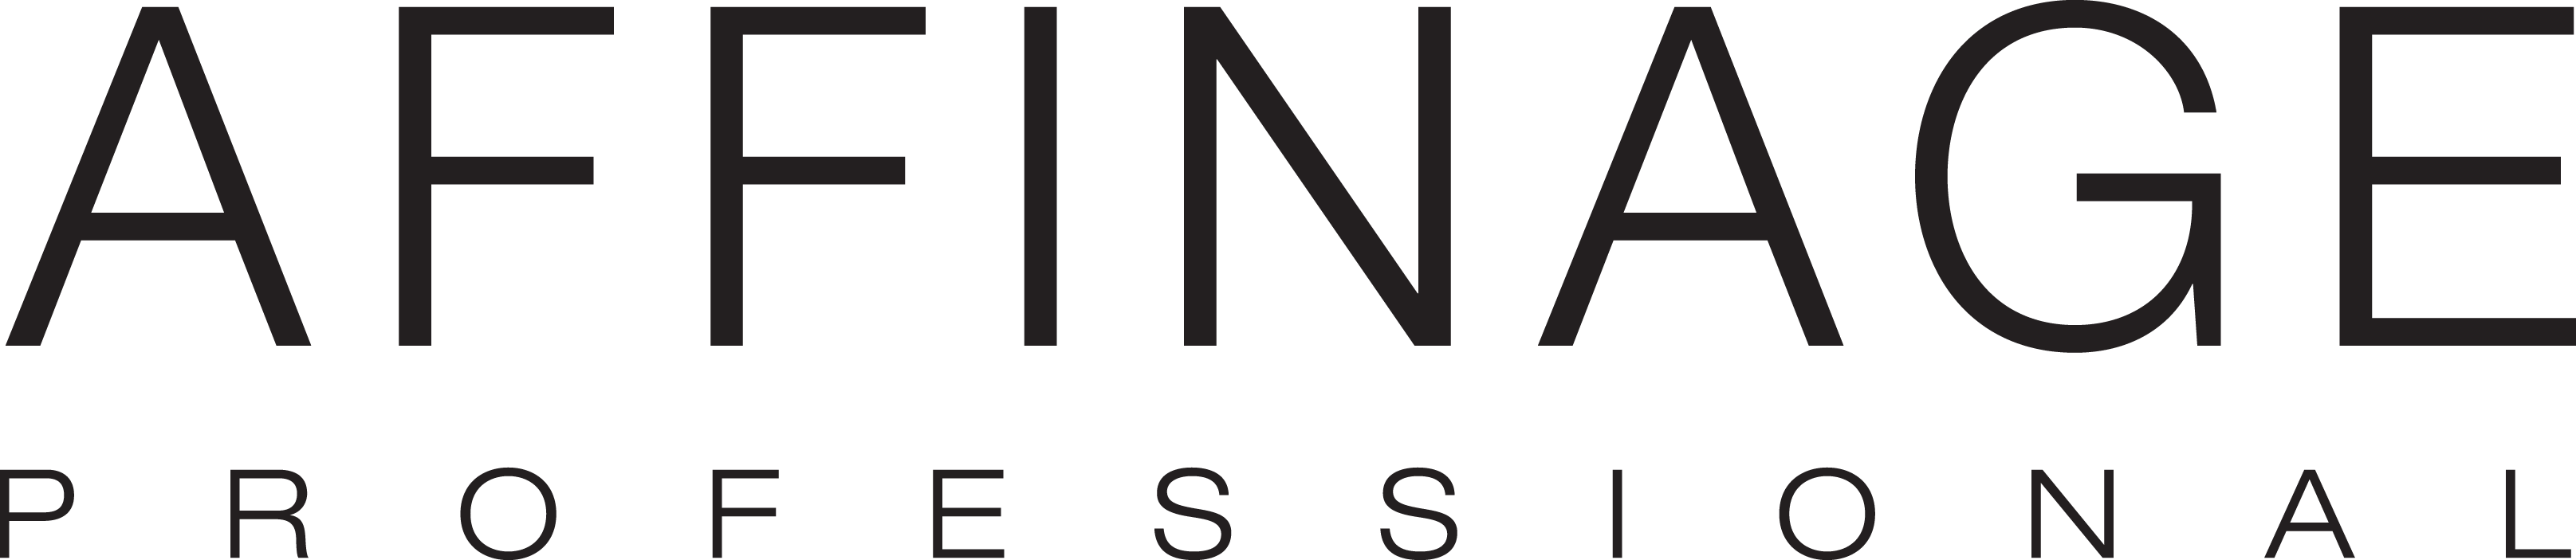 Affinage Professional logo